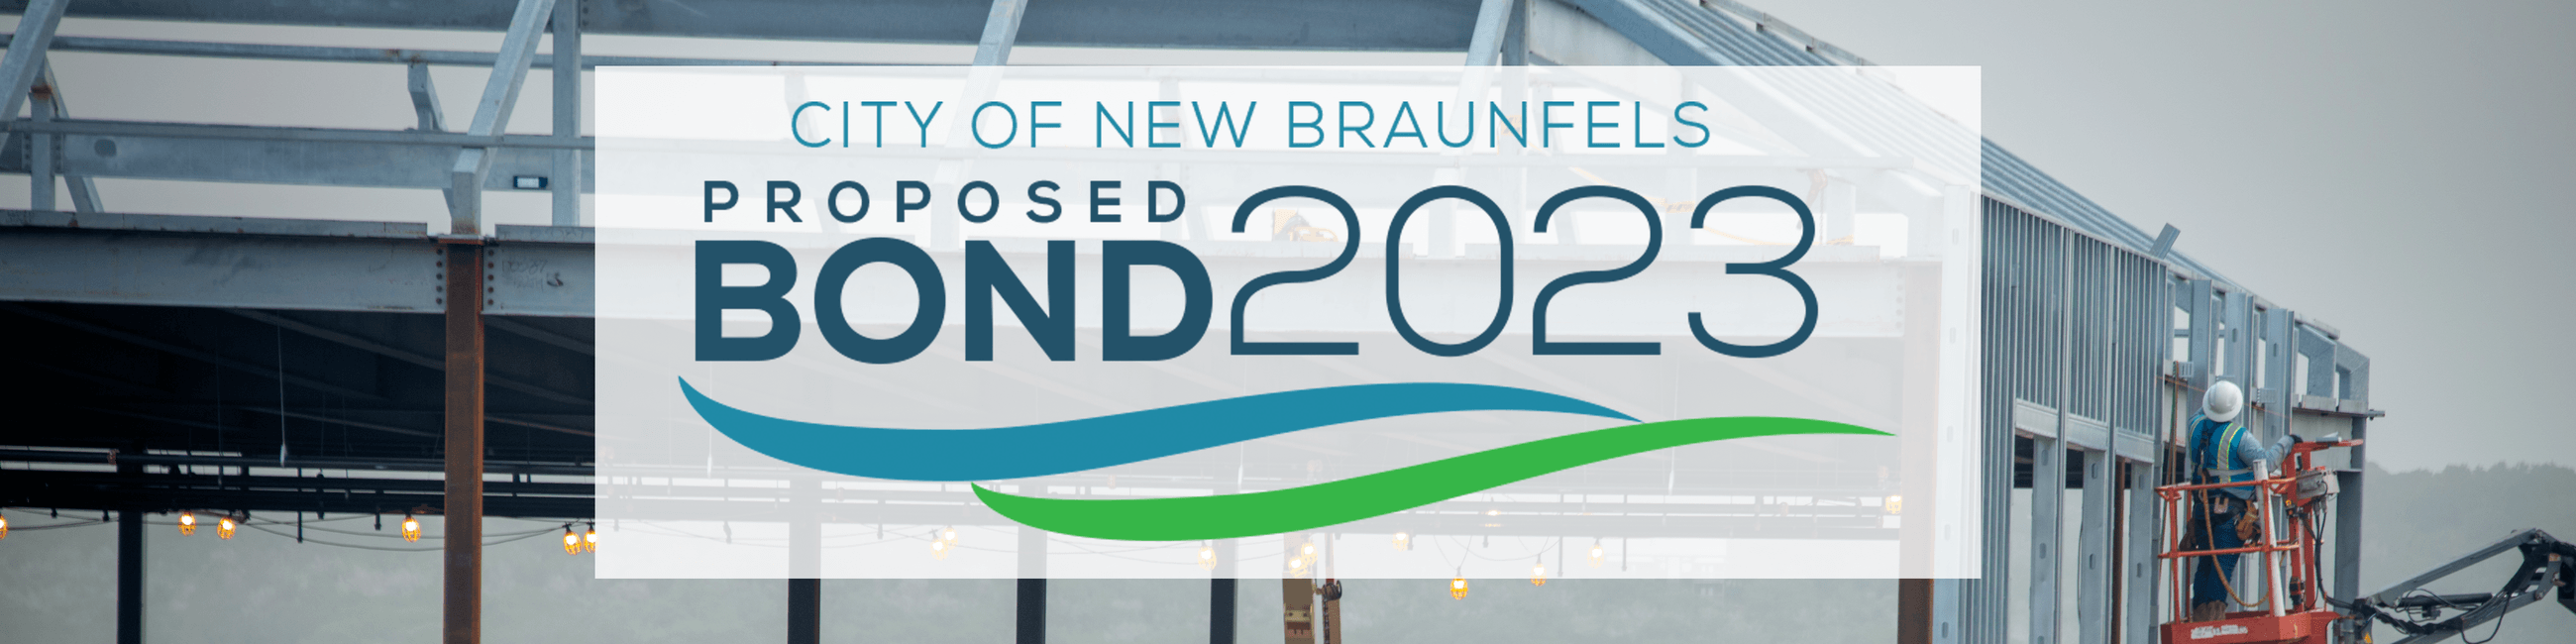 City of New Braunfels Proposed Bond 2023